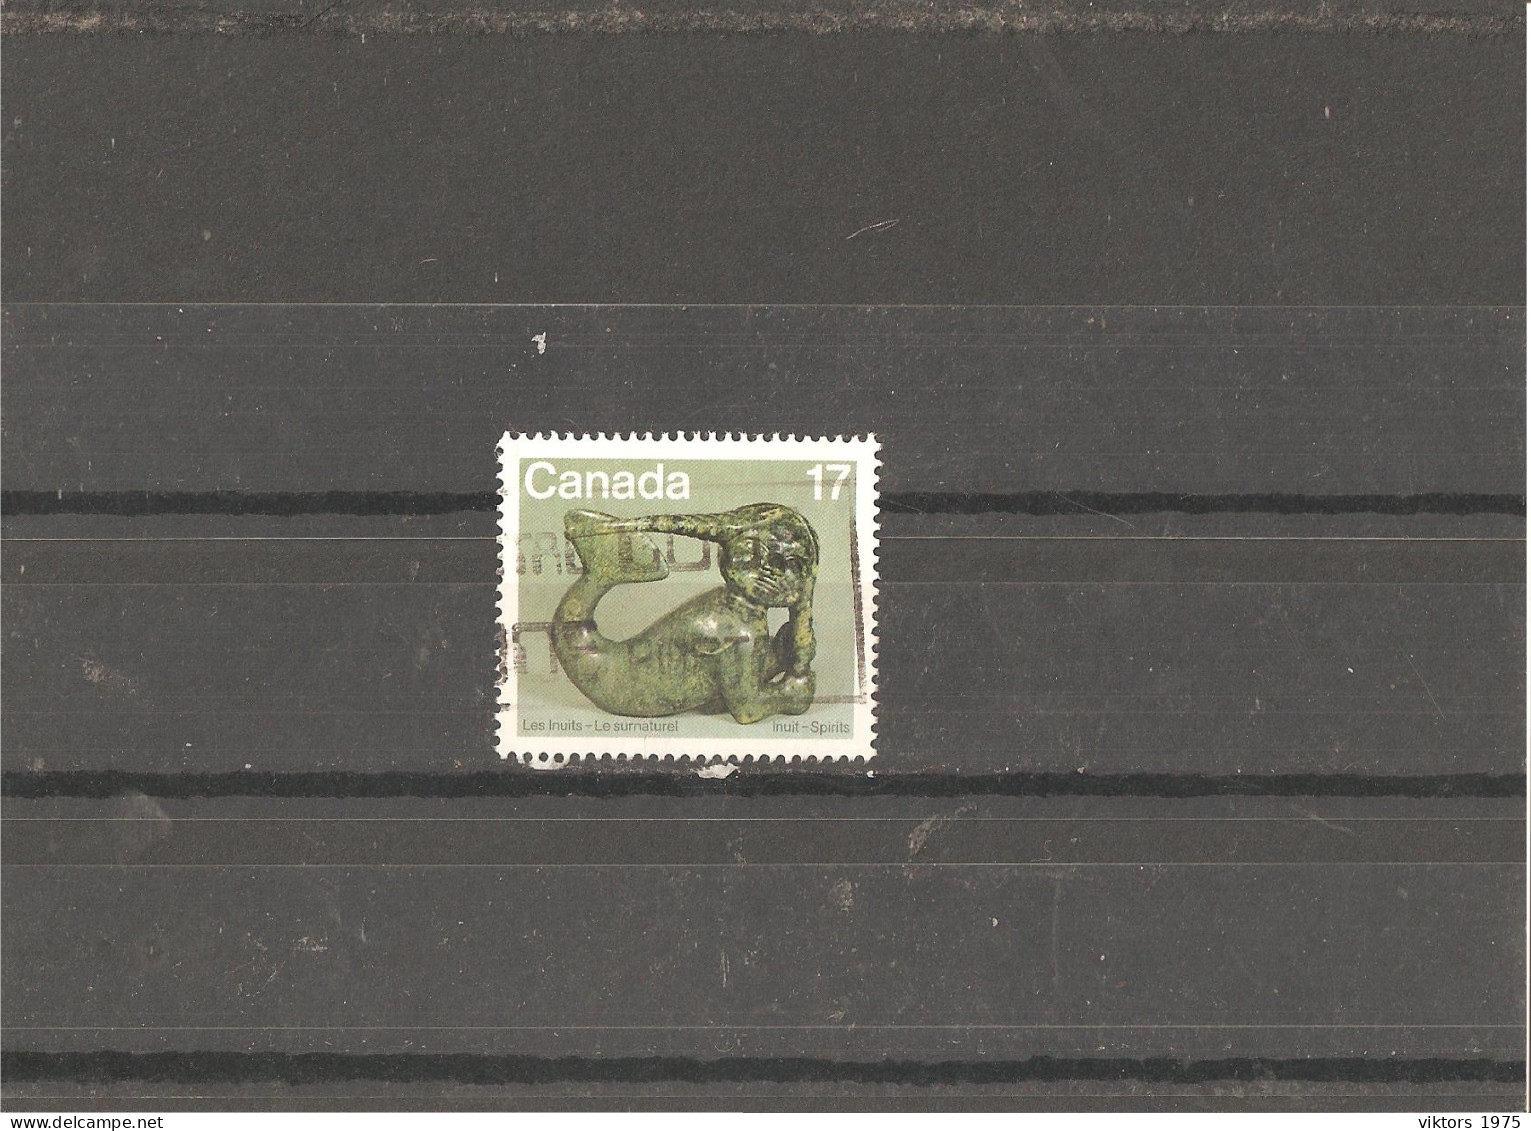 Used Stamp Nr.915 In Darnell Catalog - Gebraucht